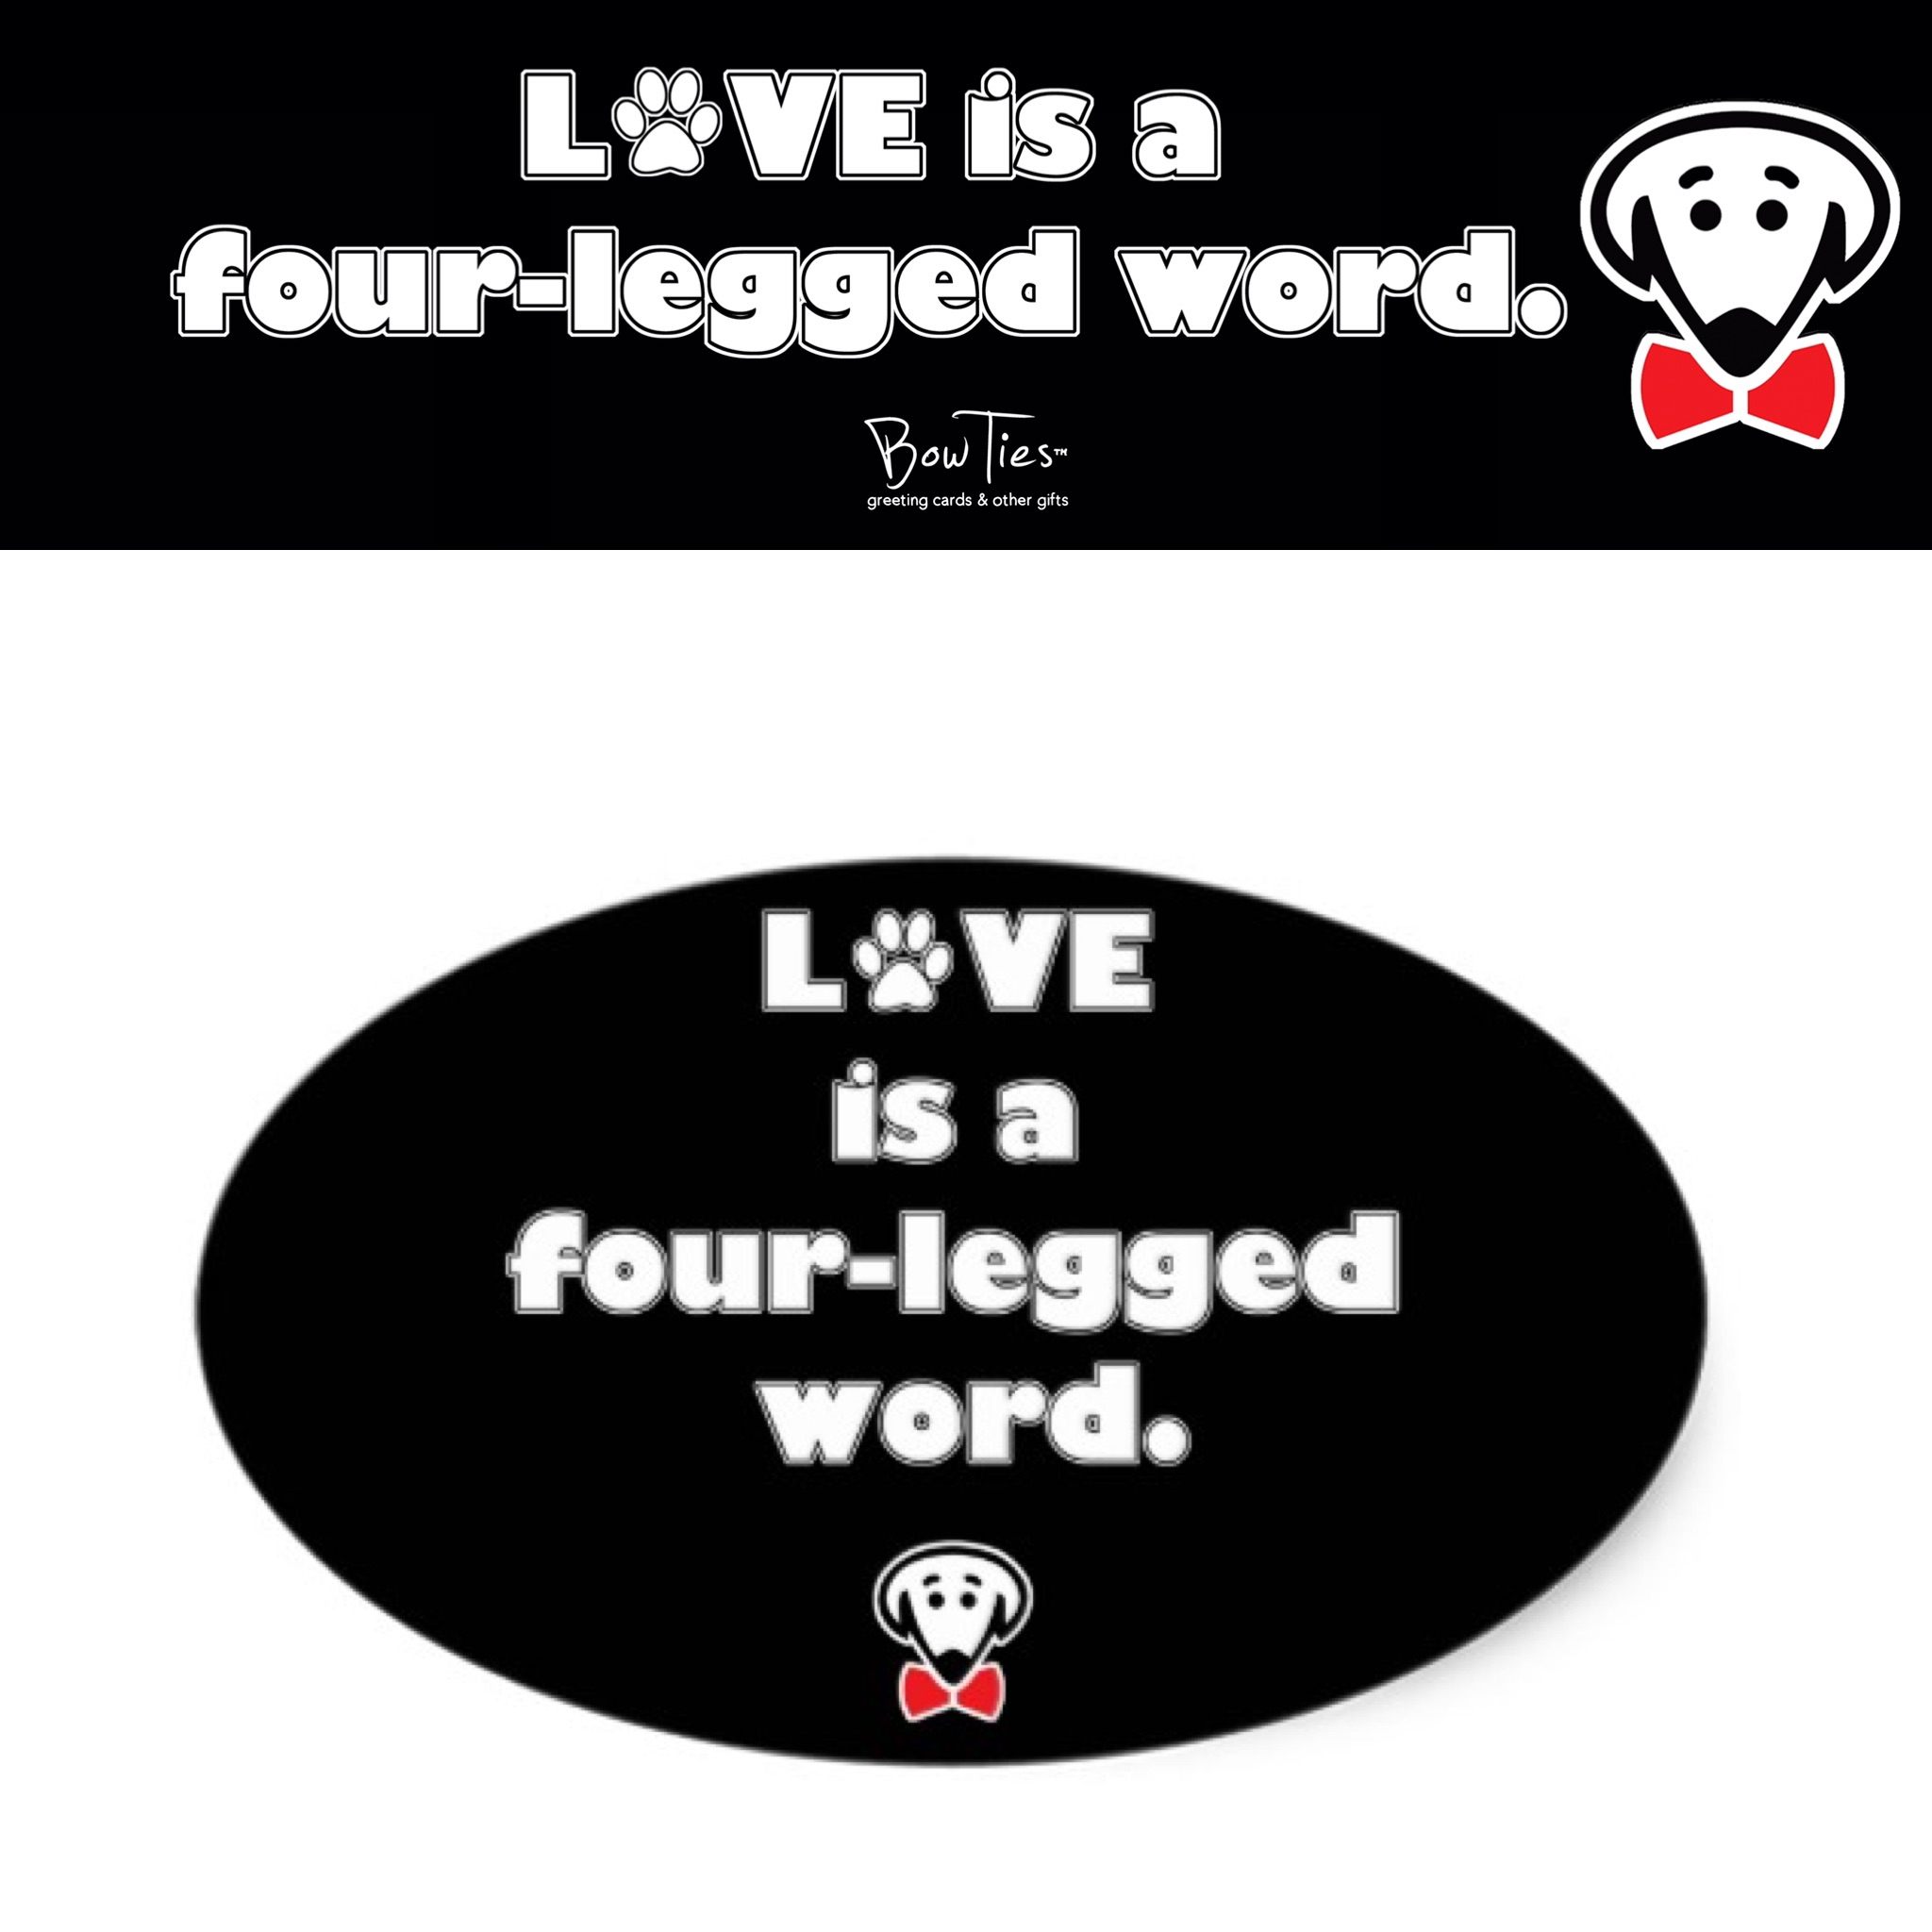 Love is a four-legged word. – sticker